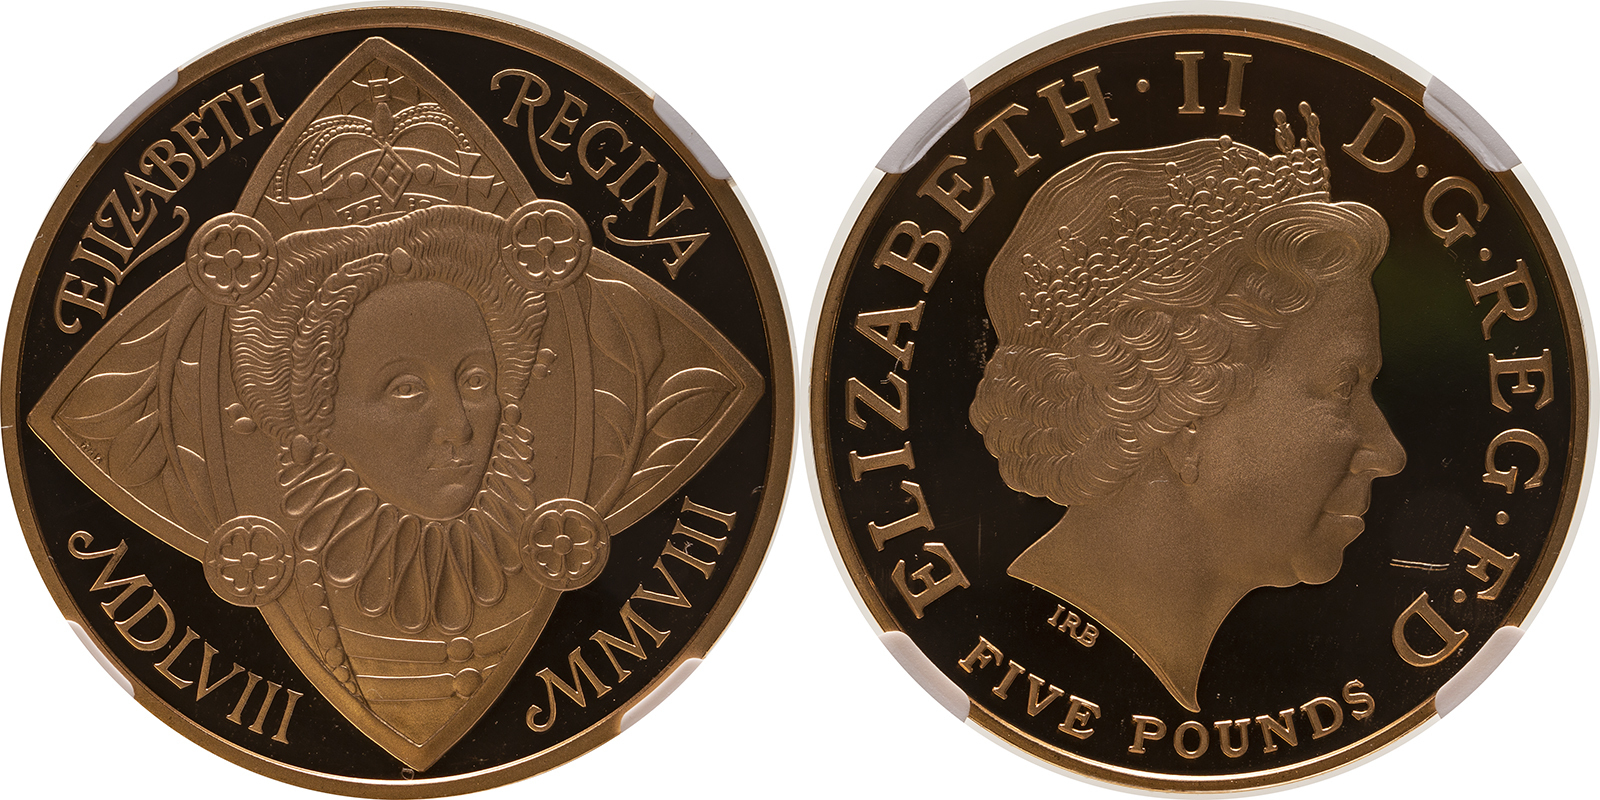 Lot 45: 2008 Gold 5 Pounds (Crown) Queen Elizabeth I Proof NGC PF 70 ULTRA CAMEO #6134254-001 (AGW=1.1777 oz.)